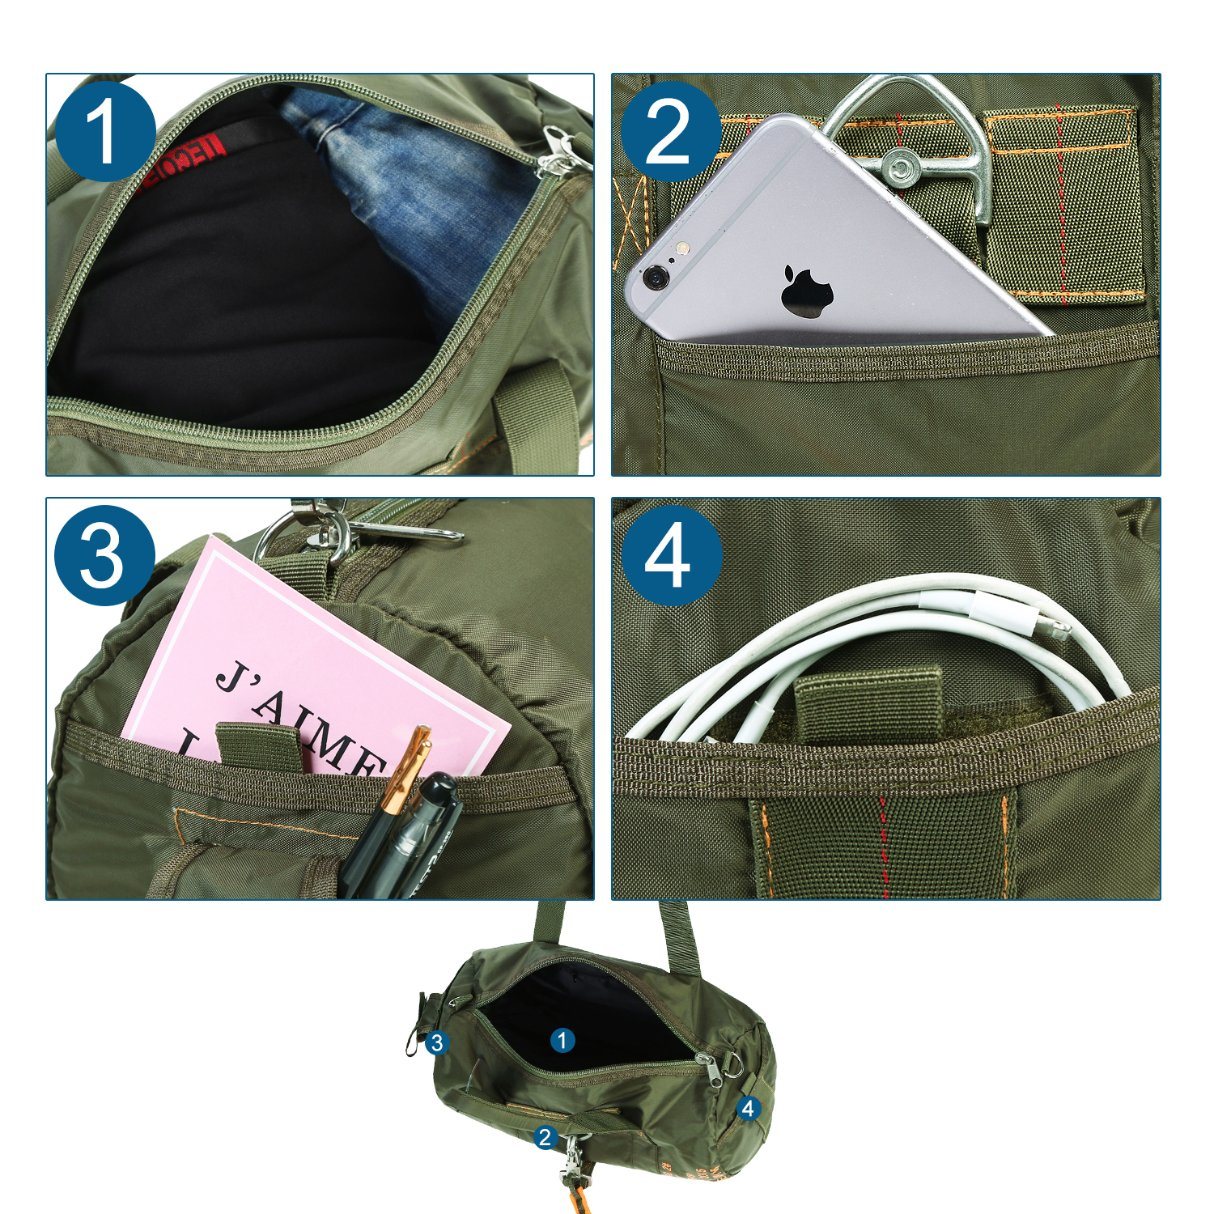 Air Force Military Duffle Bag Duty Nylon Tactical Duffel